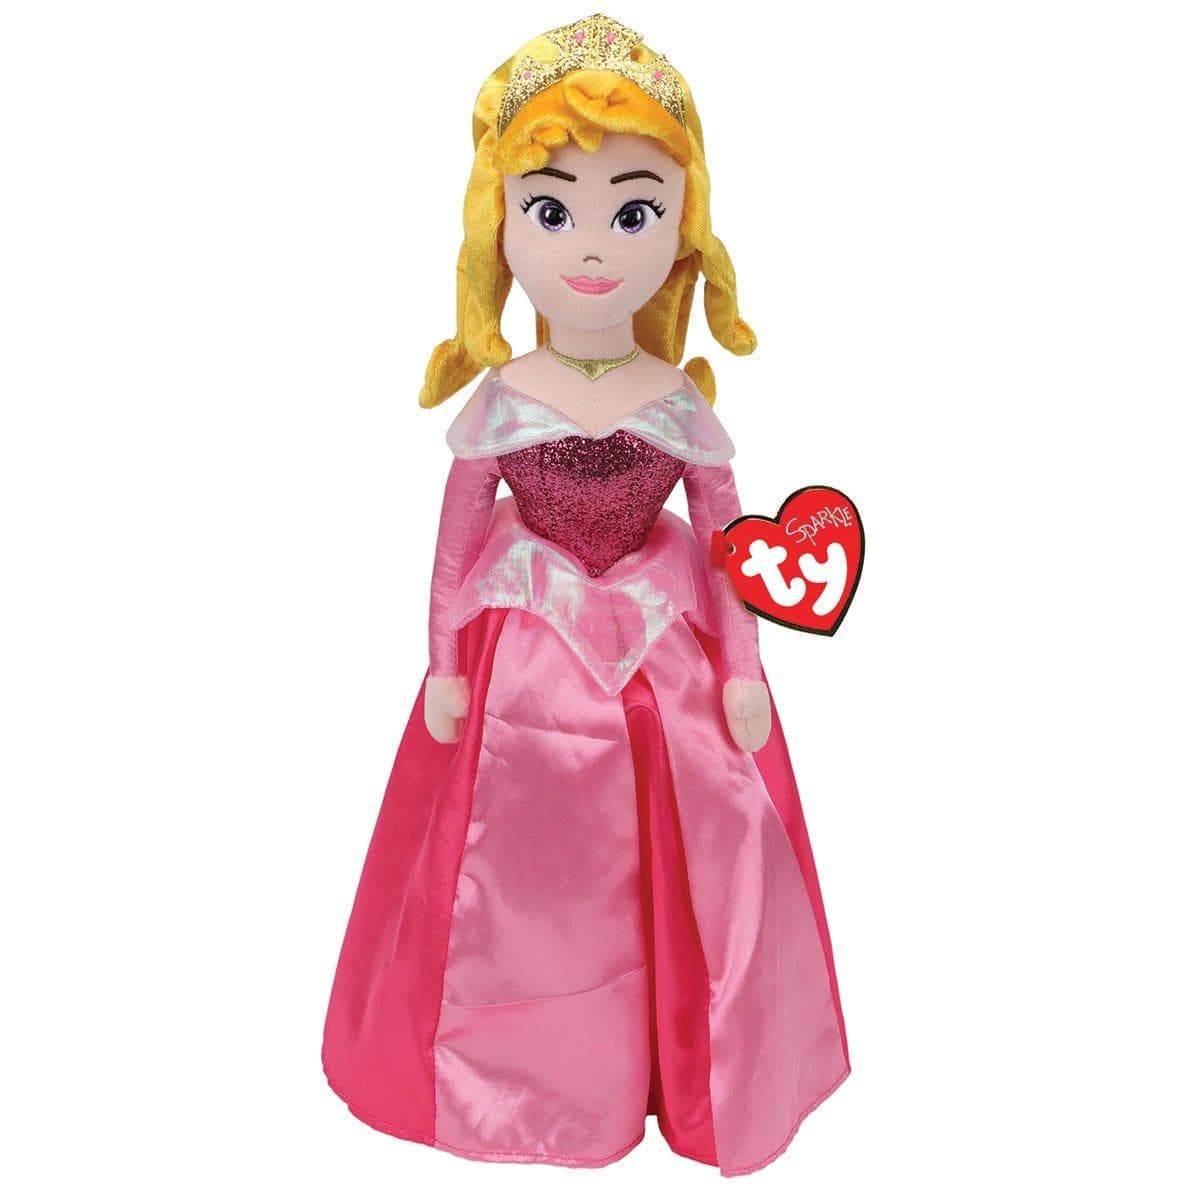 Buy Plushes Aurora Princess Plush sold at Party Expert